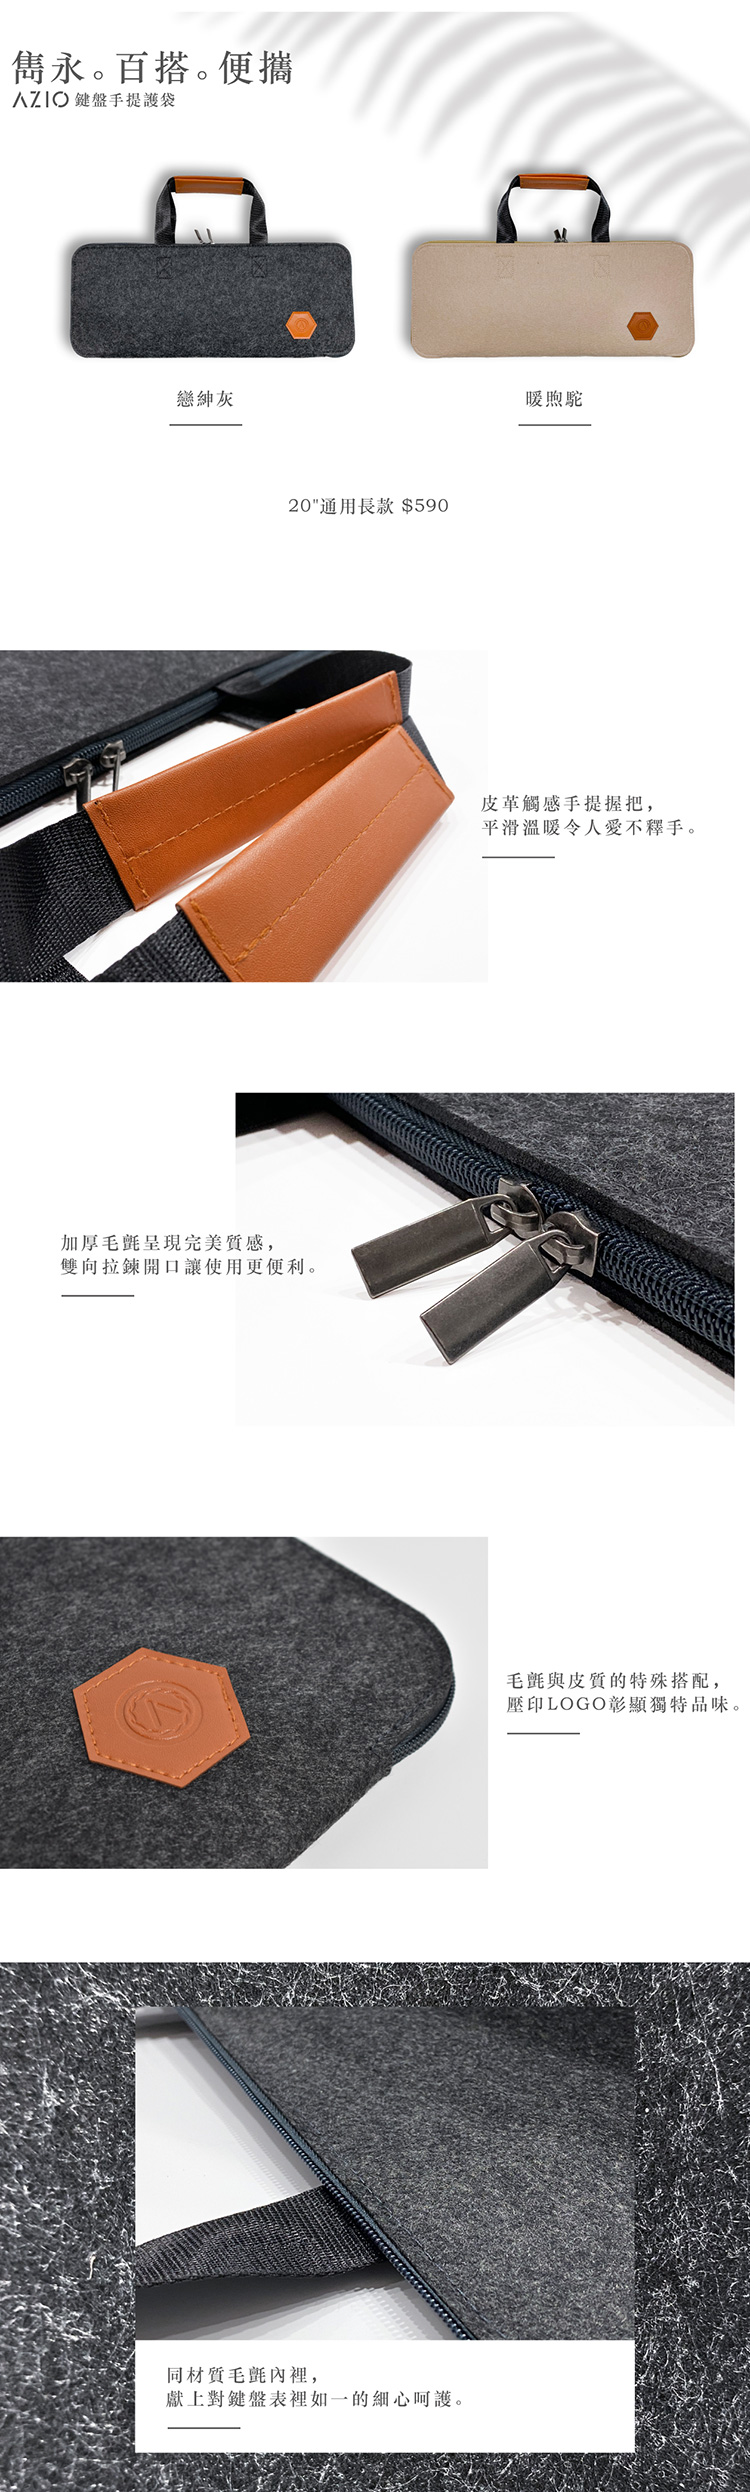 AZIO-20吋-鍵盤手提護袋-灰色-內.jpg